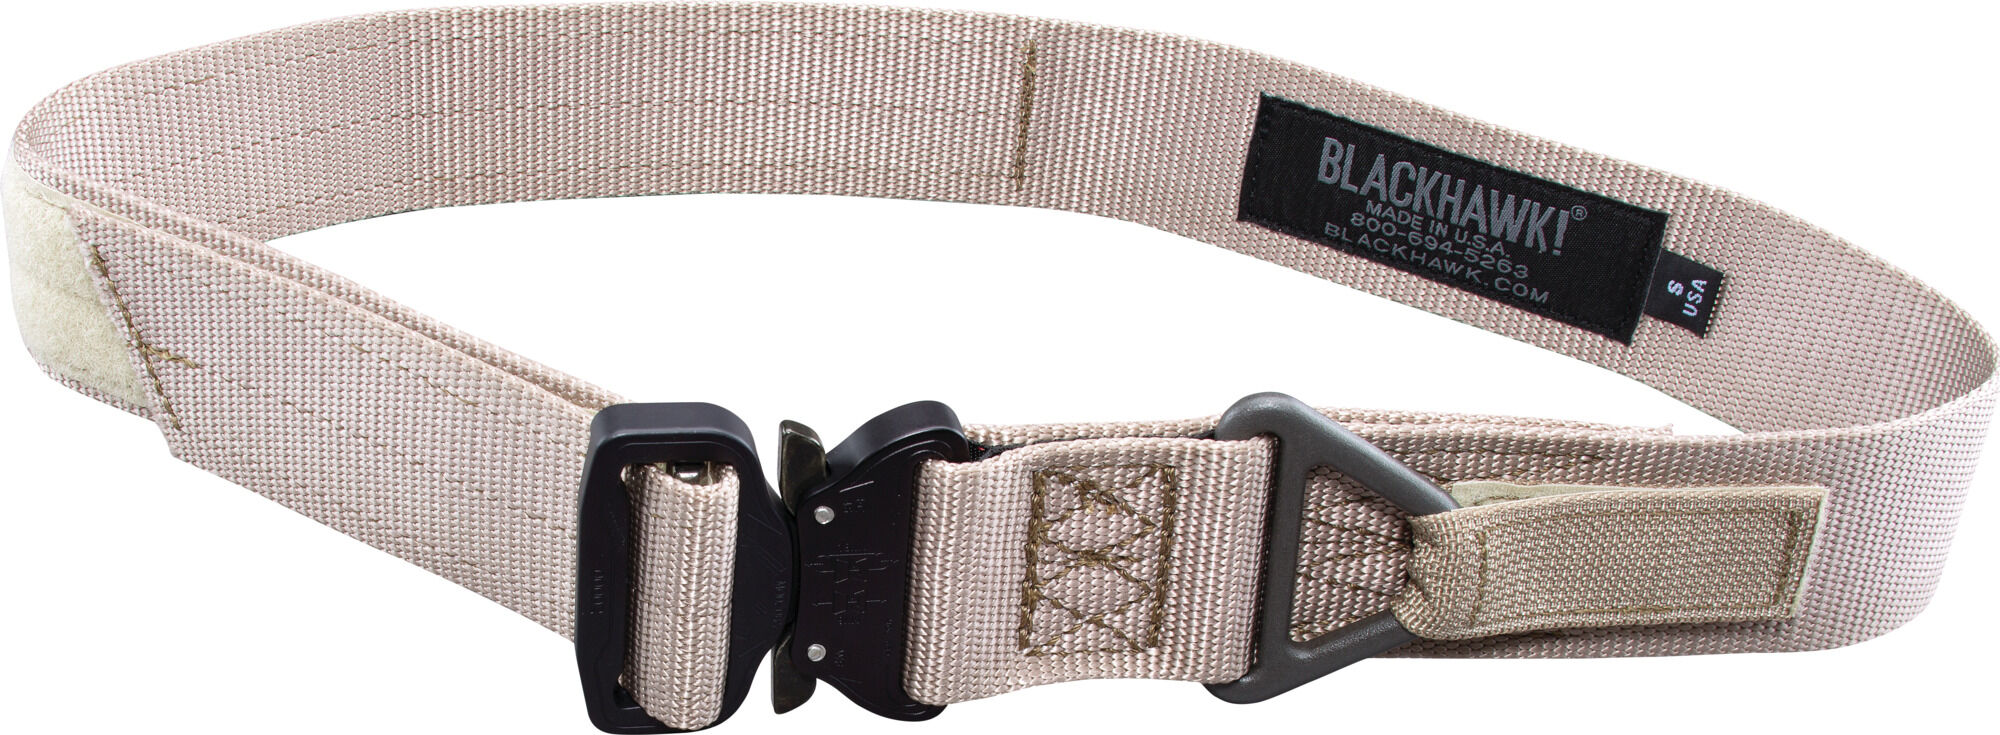 Buy CQB/Rigger's Belt And More | Blackhawk